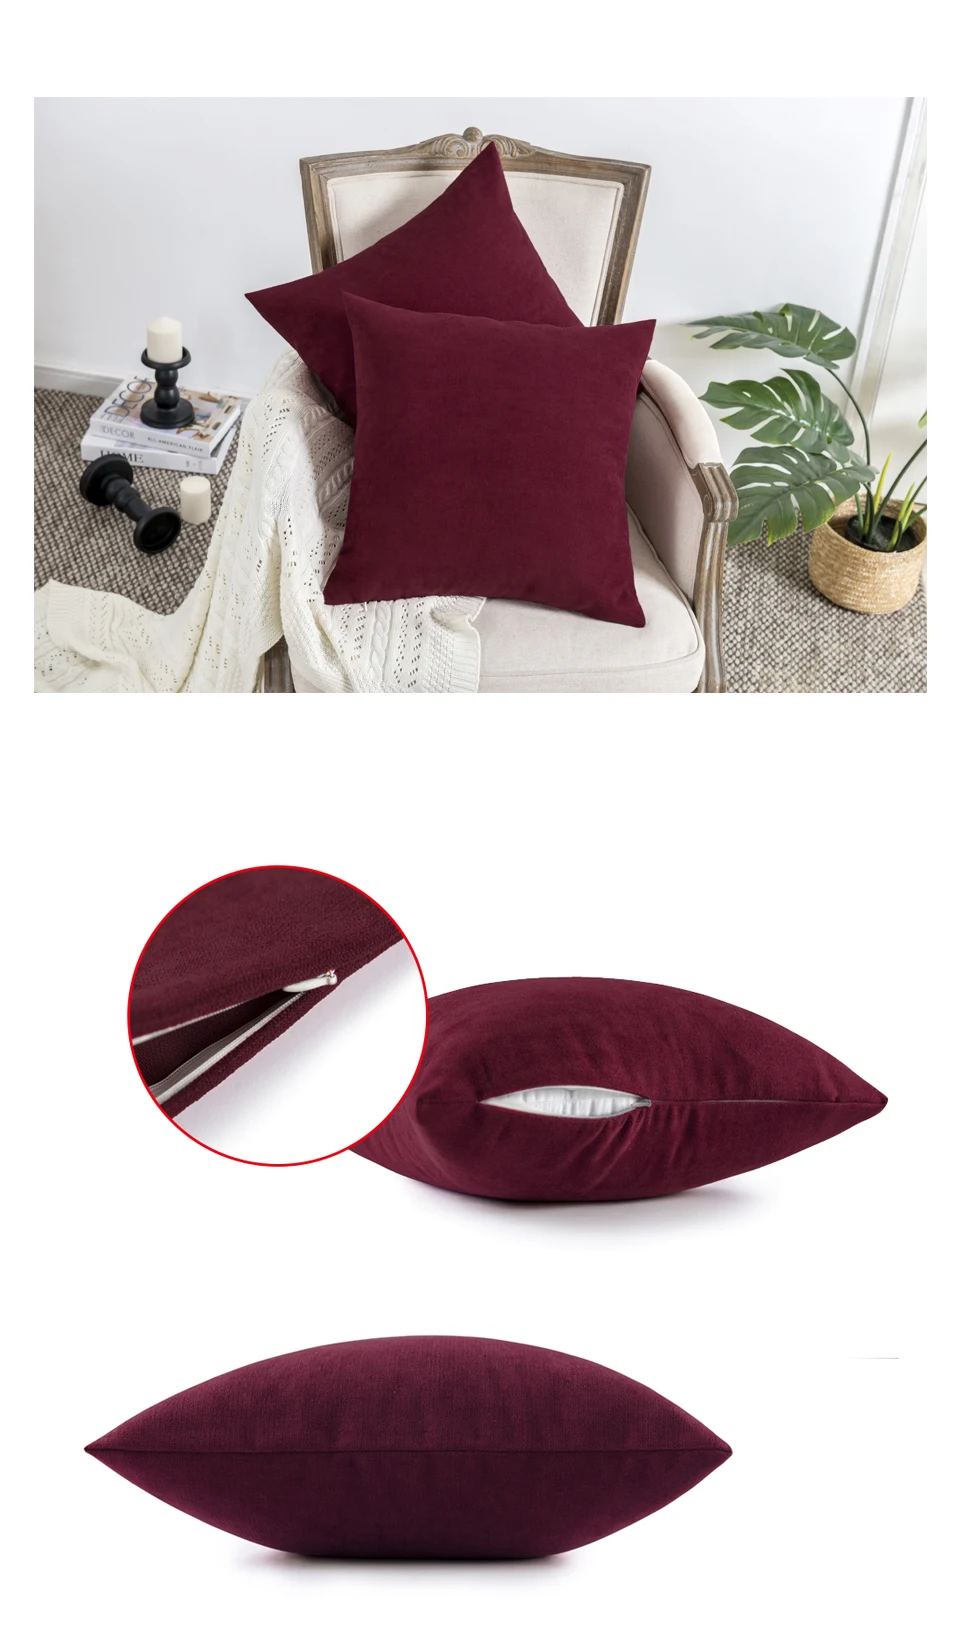 GIGIZAZA зеленый подушки Чехлы размером 45*45, 50 х 50 для диван-кровать домашний декор диванных подушек Чехлы для дивана Спальня класса люкс, наволочки для подушек